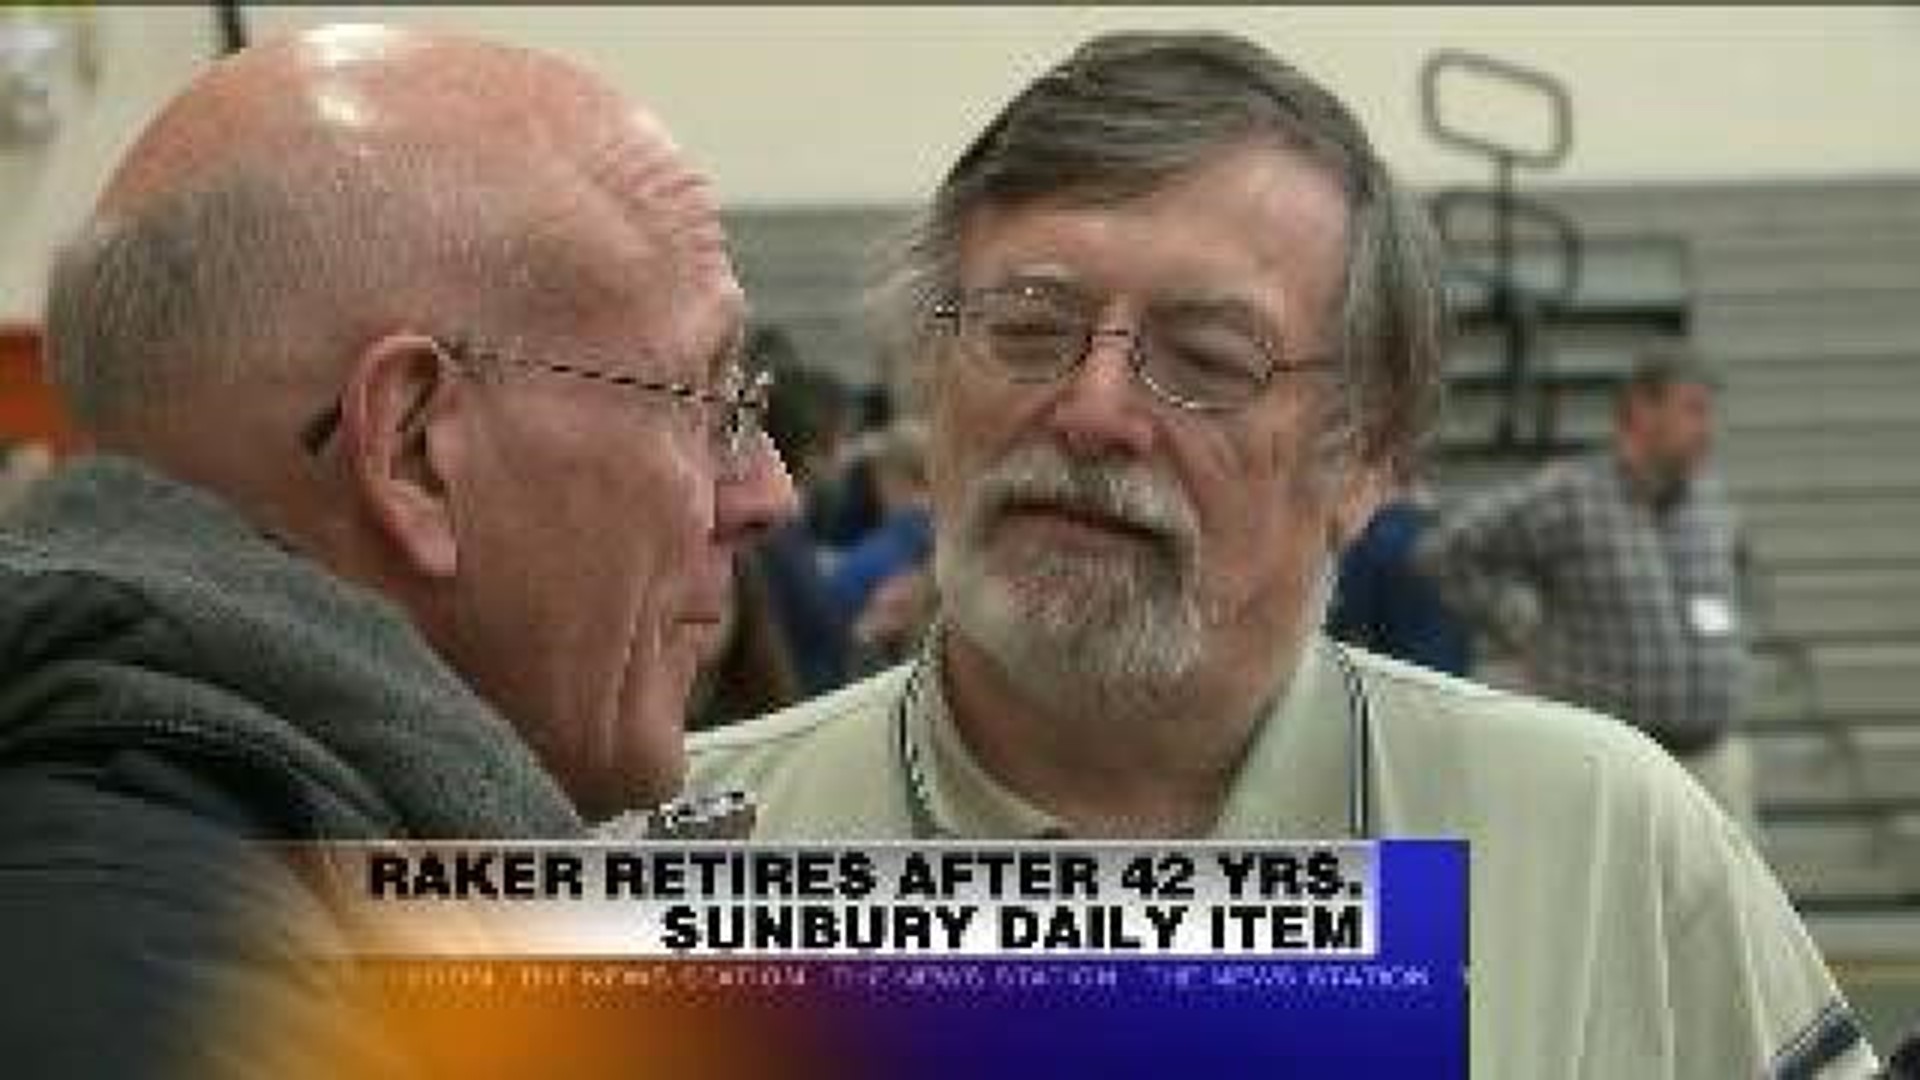 Harold Raker Retires After 42 Years